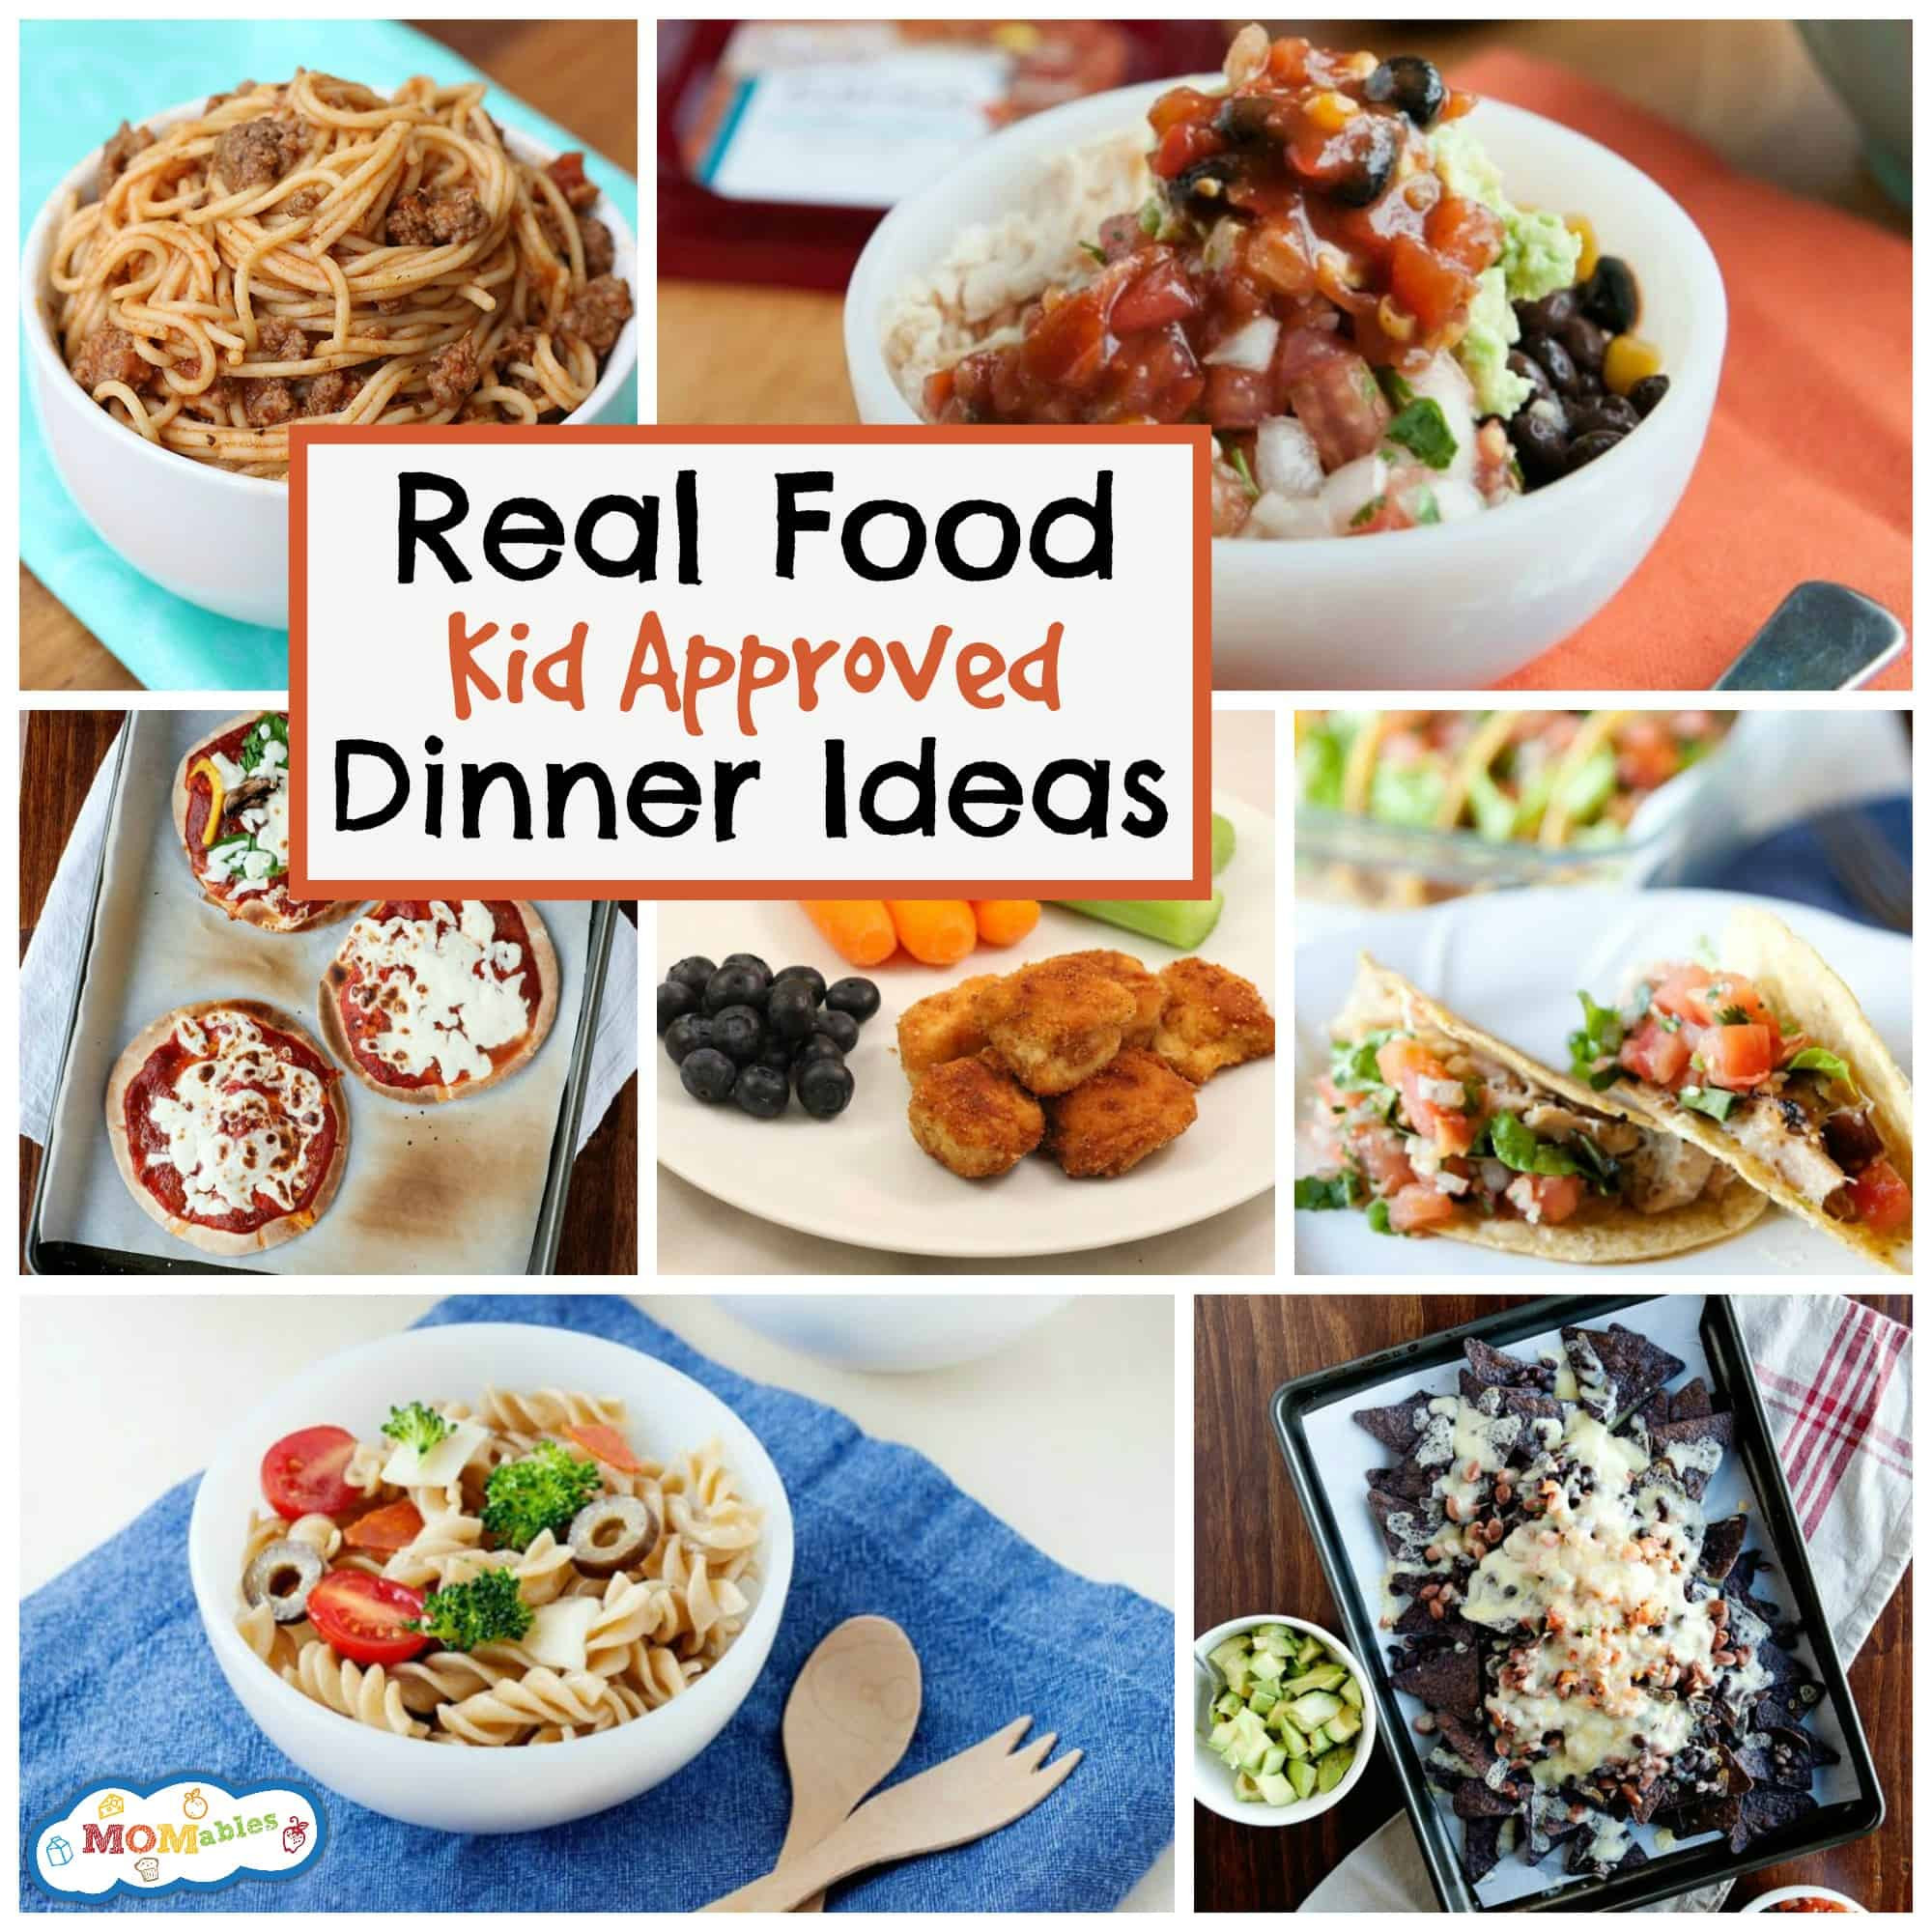 Easy Kid Friendly Dinner Ideas
 10 Real Food Kid Approved Dinner Ideas